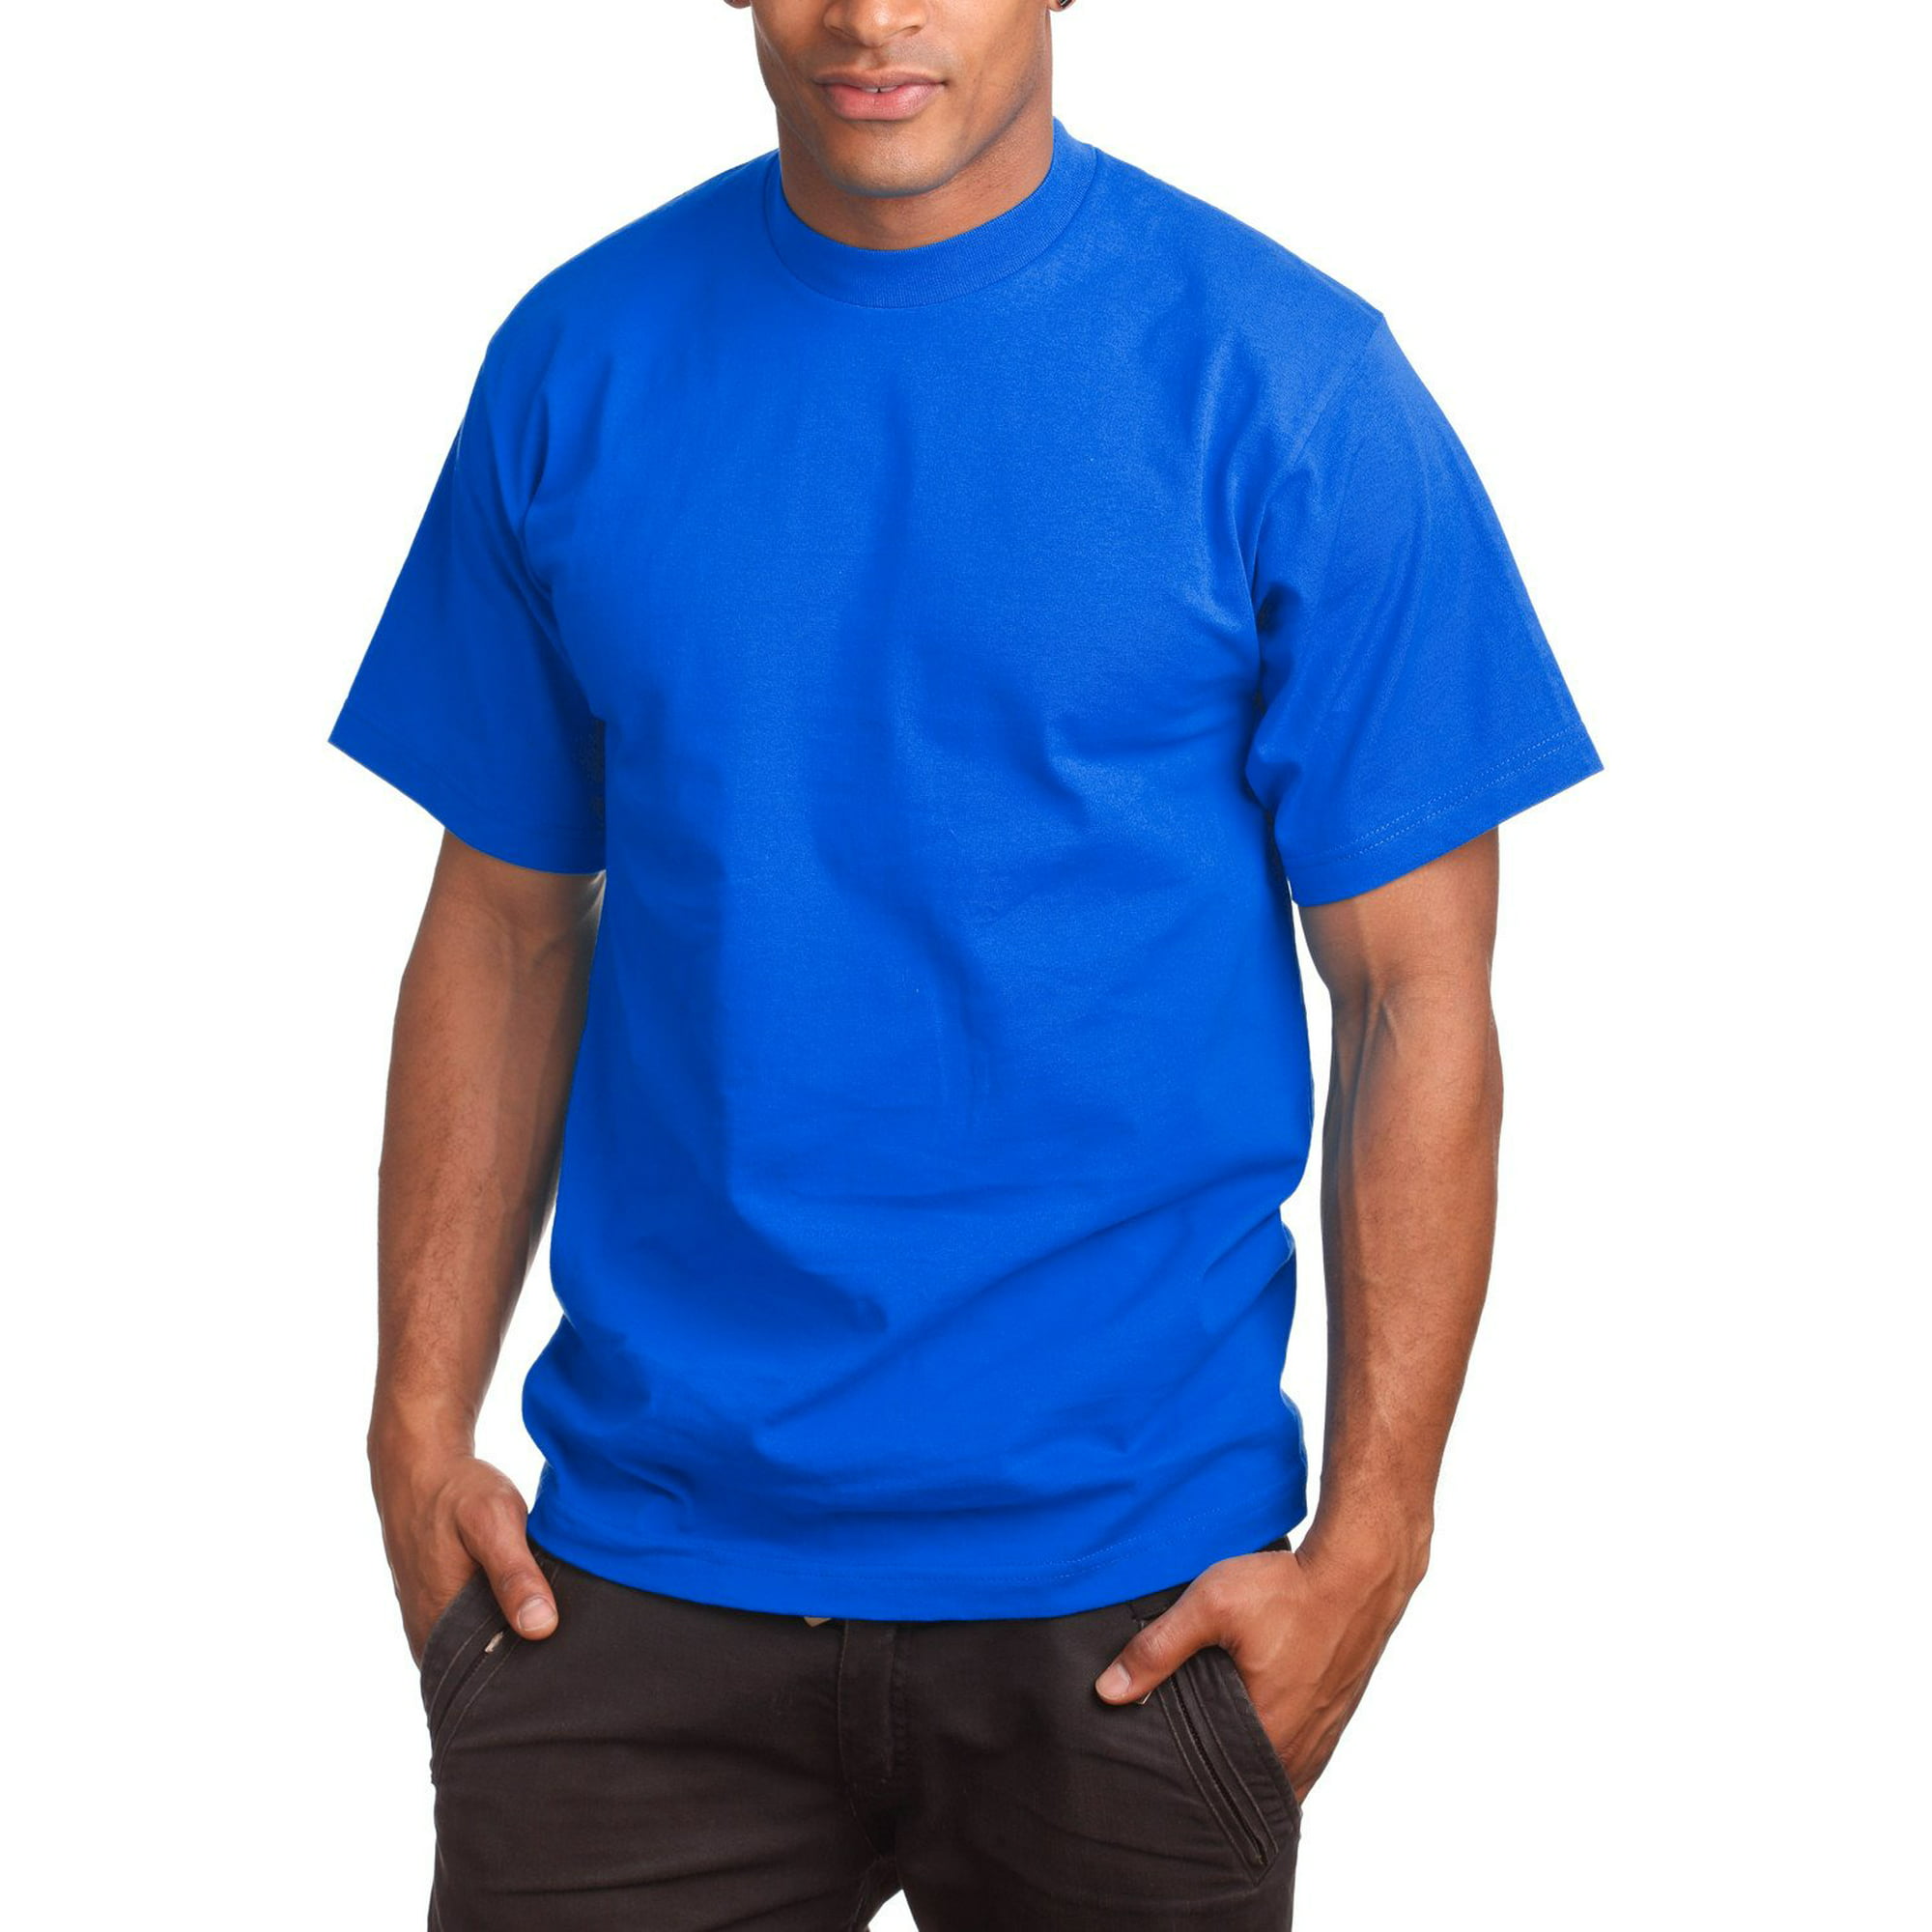 Pro 5 Short Sleeve T-shirt,Royal Blue,4XL Tall - Walmart.com